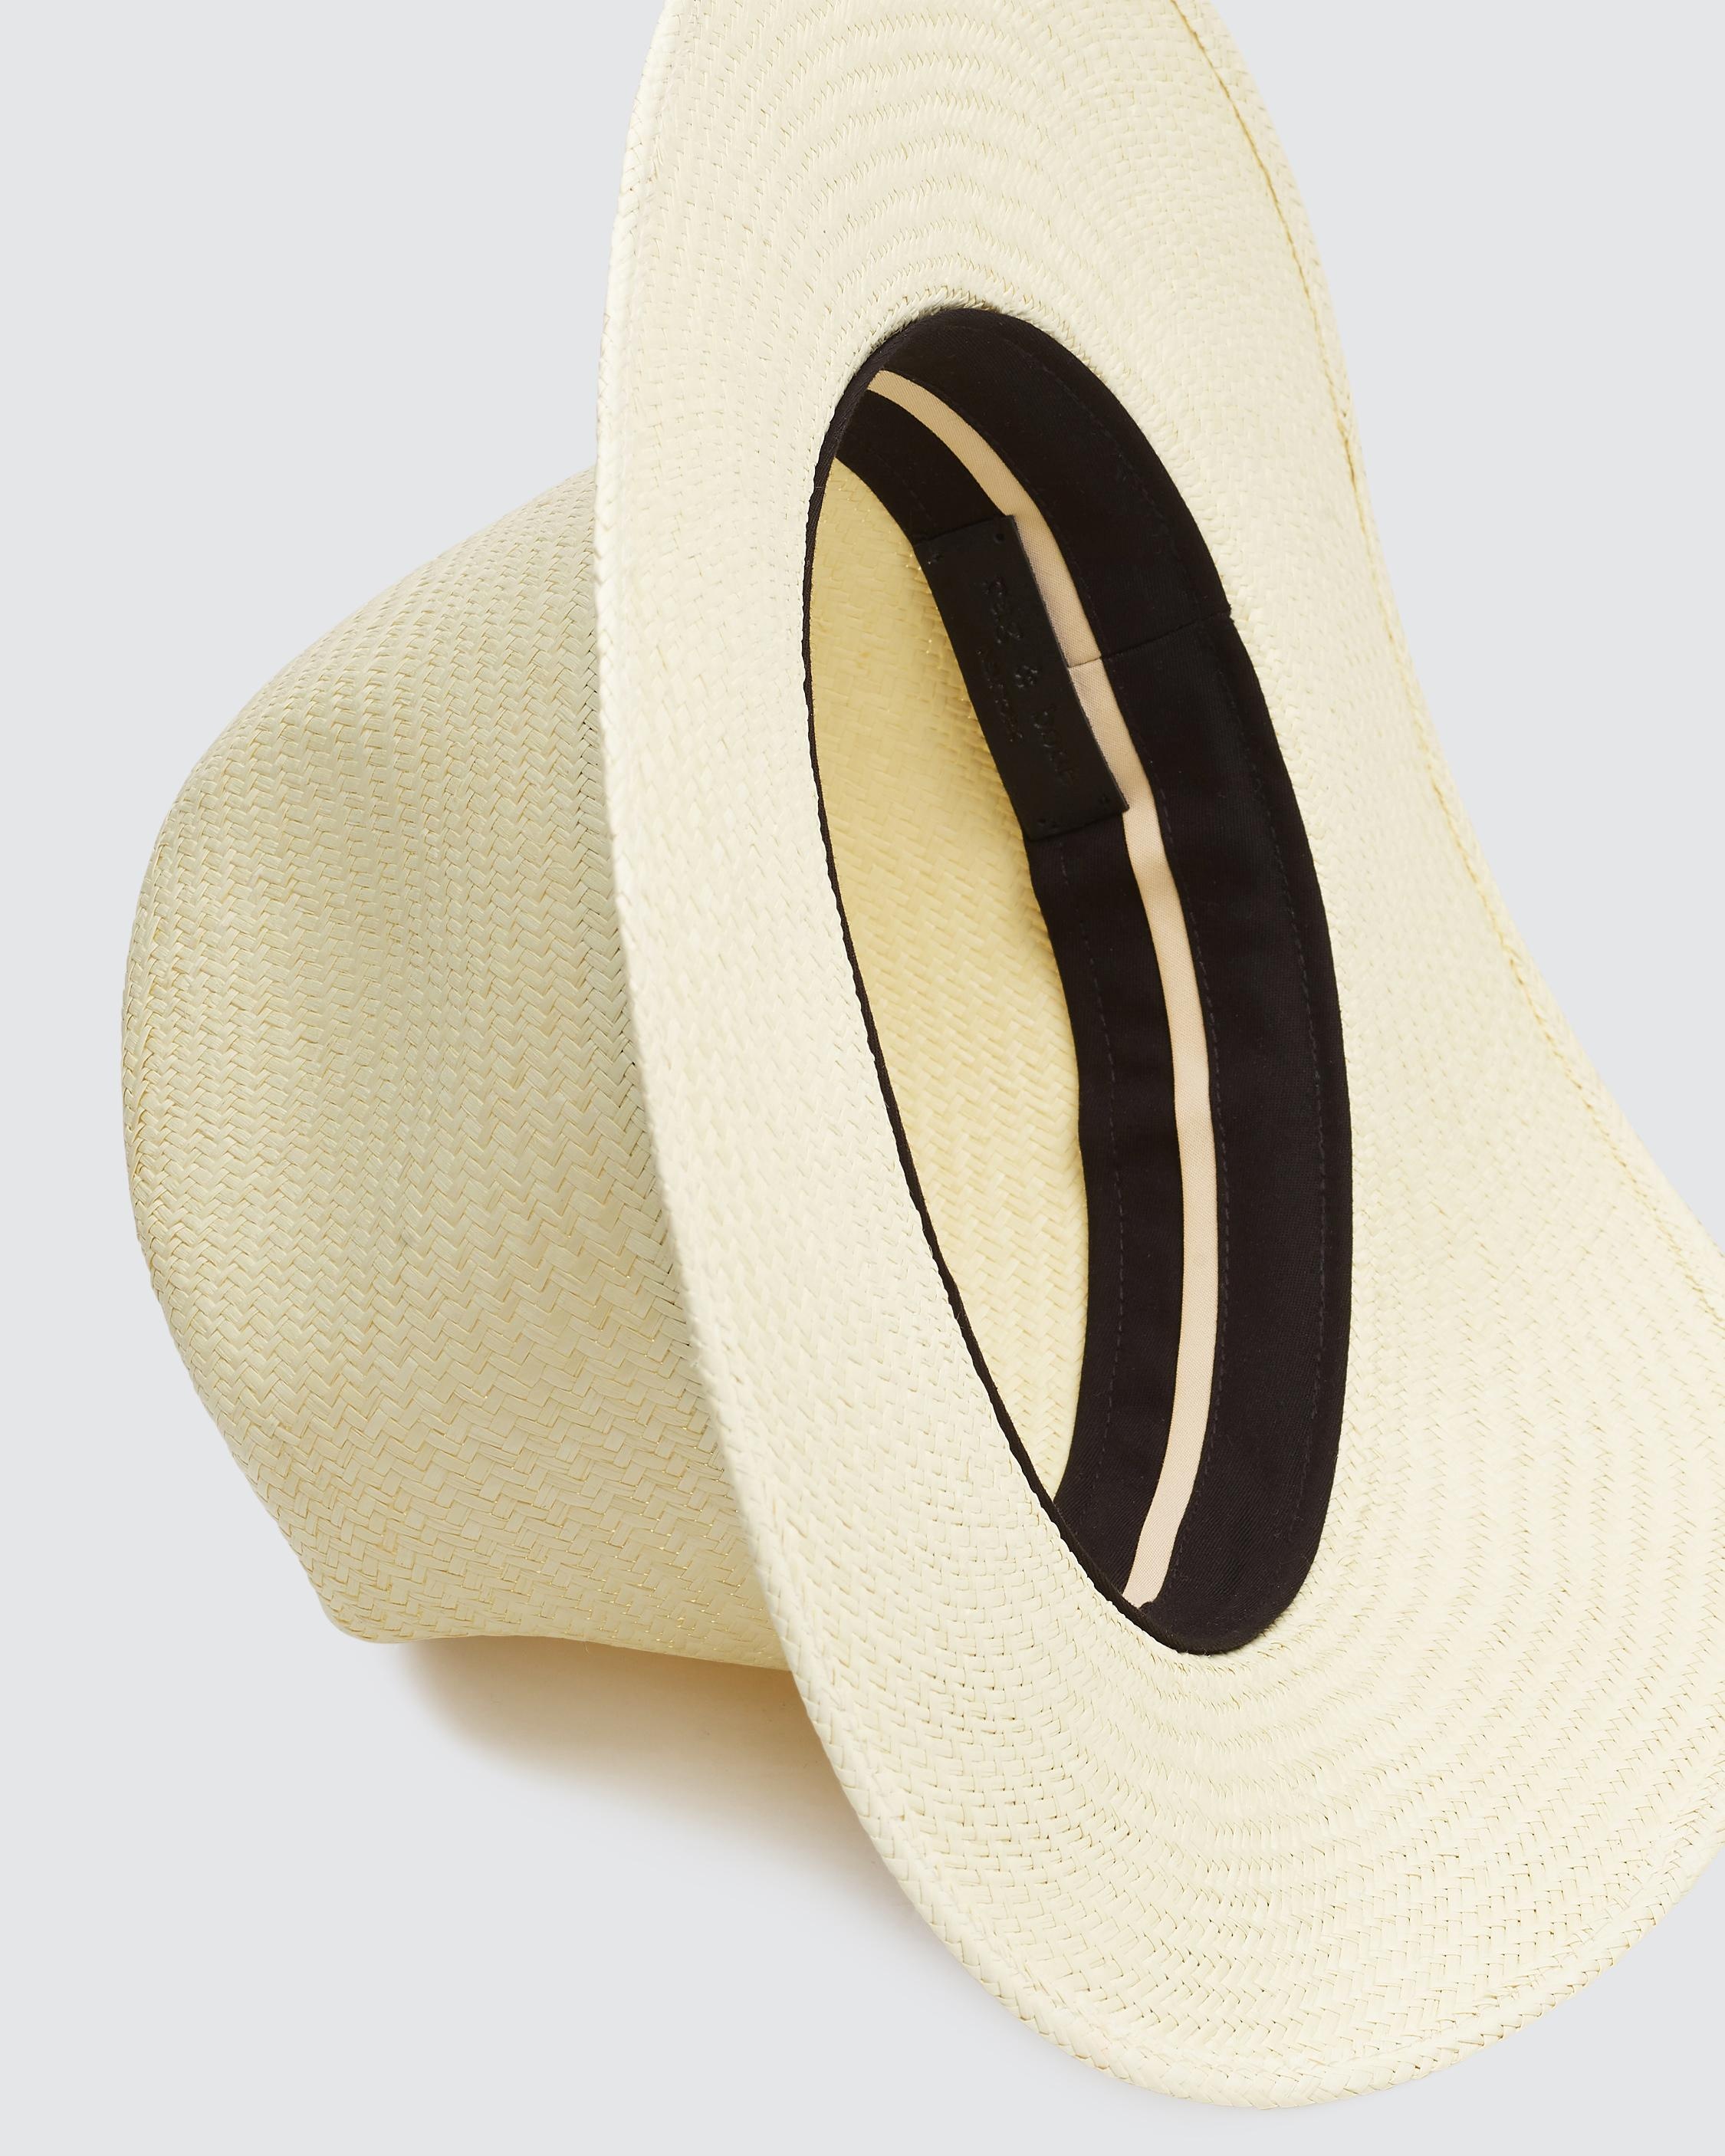 Panama Hat
Straw Hat - 3